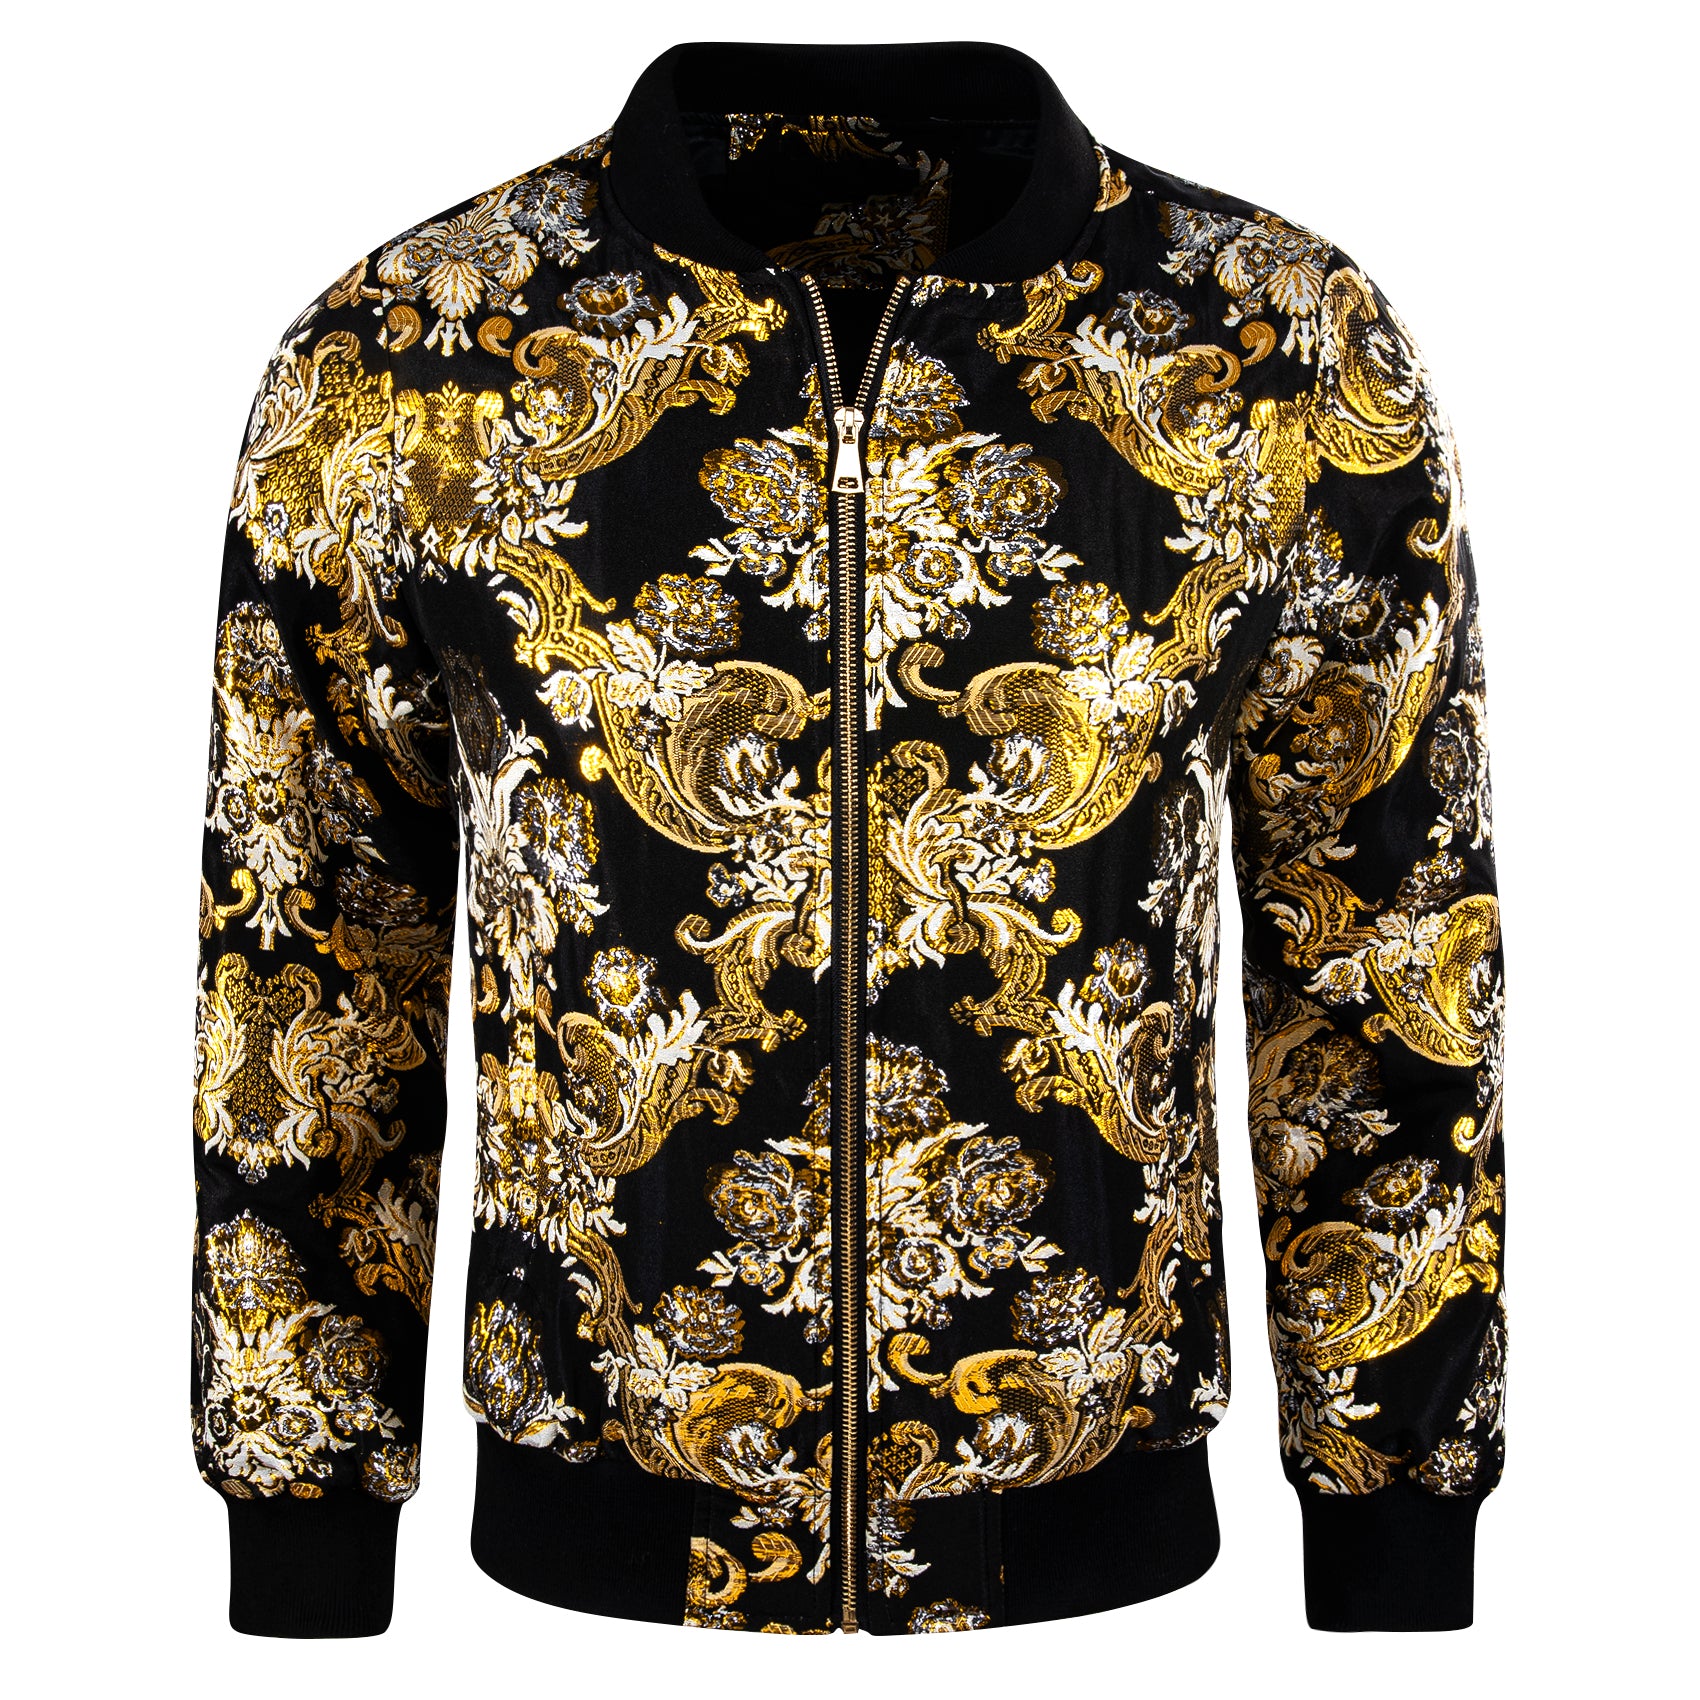 Men's Gold Black Floral Jacquard Paisley Jacket